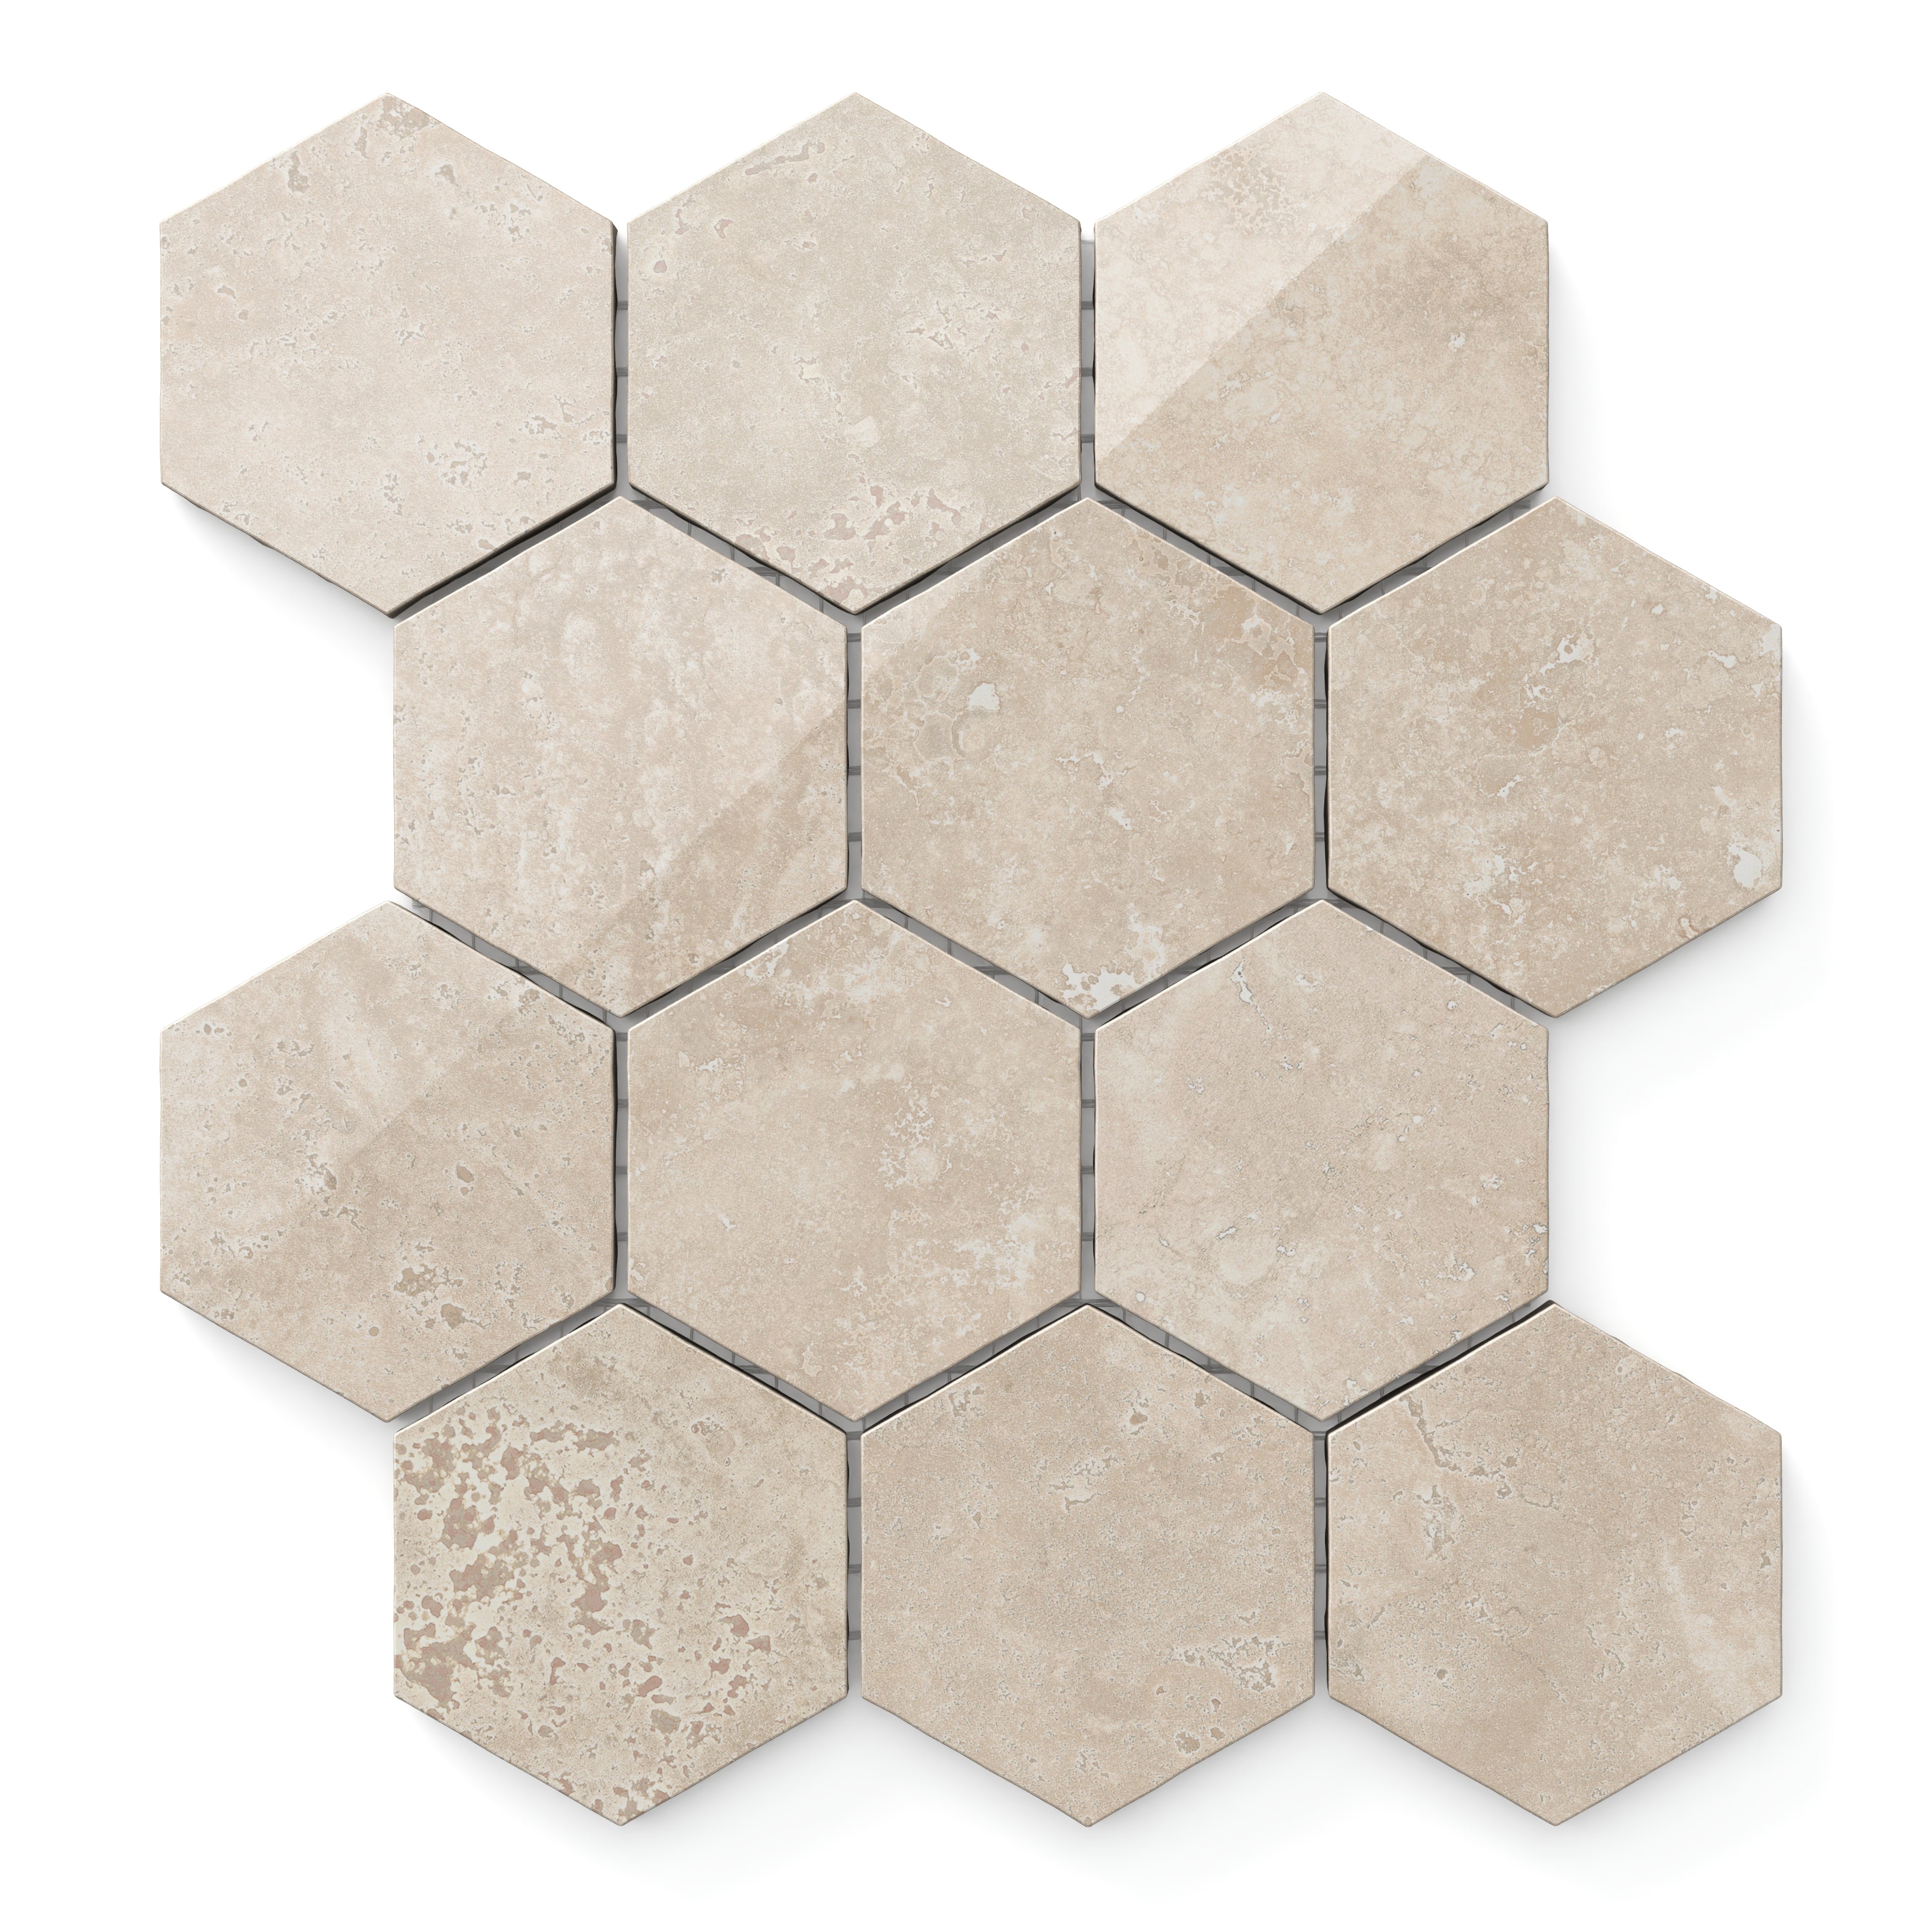 Leona 3x3 Polished Porcelain Hexagon Mosaic Tile in Marfil